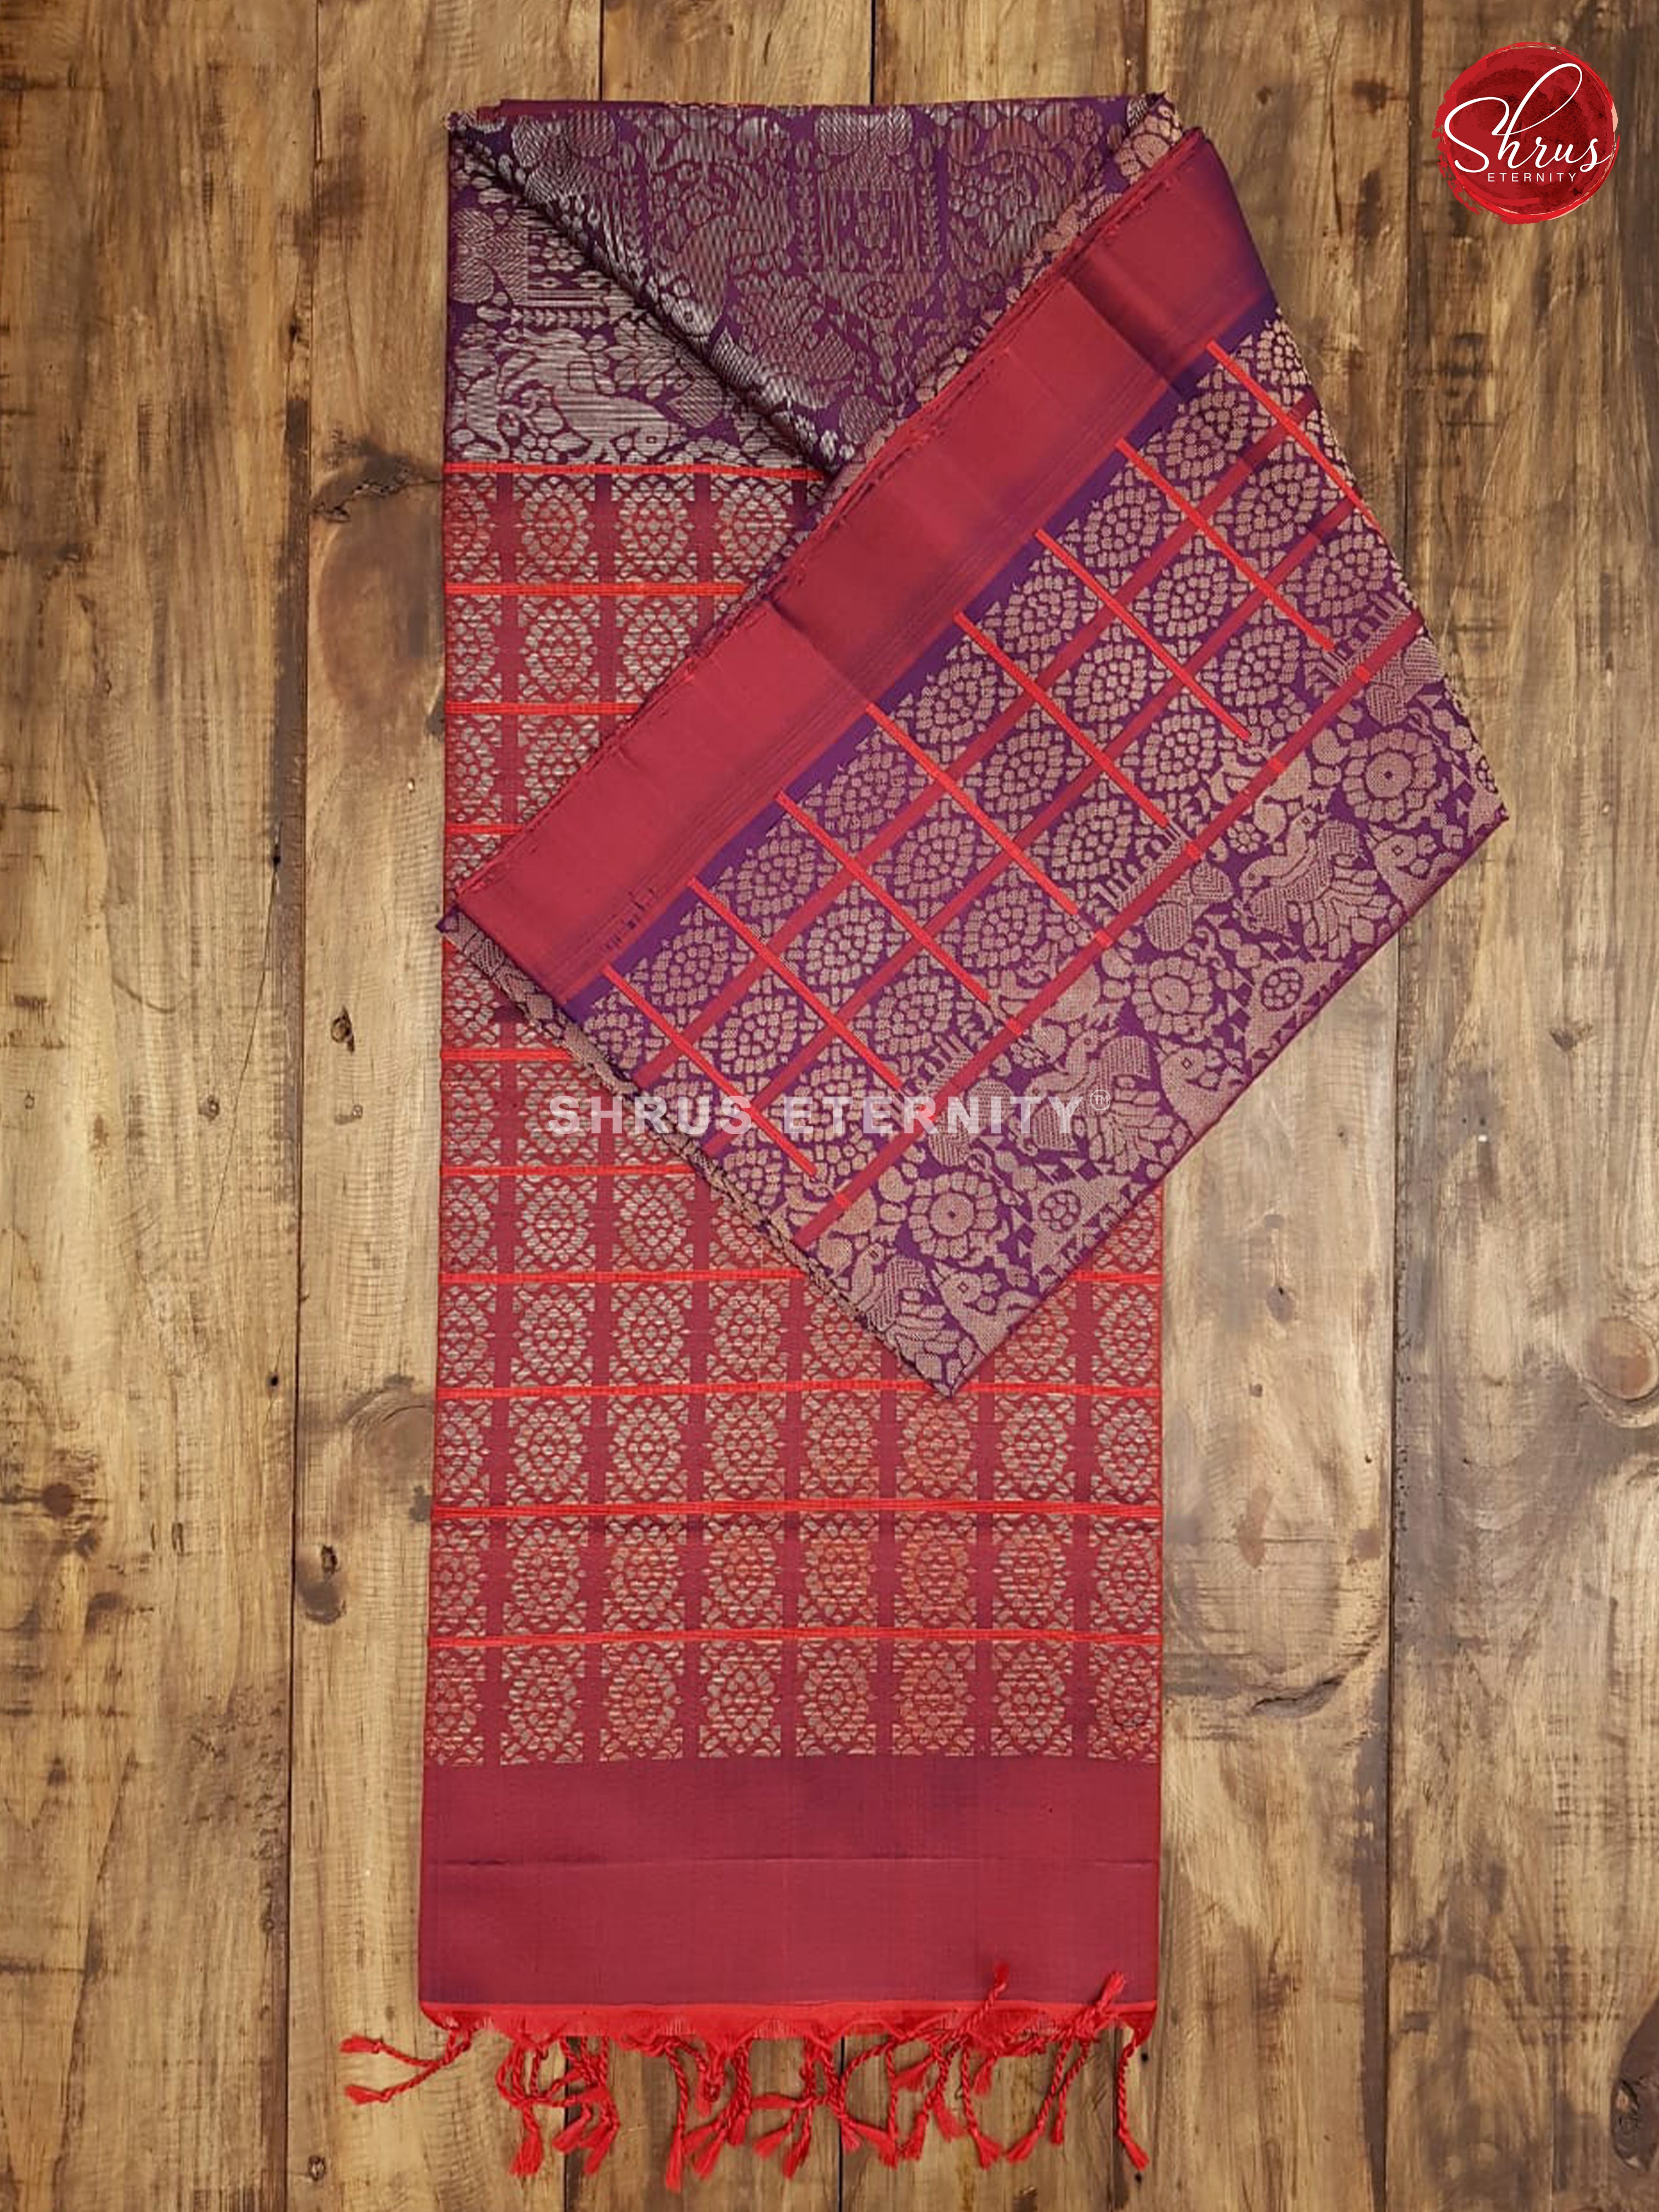 Blue & Purple - Soft Silk - Shop on ShrusEternity.com